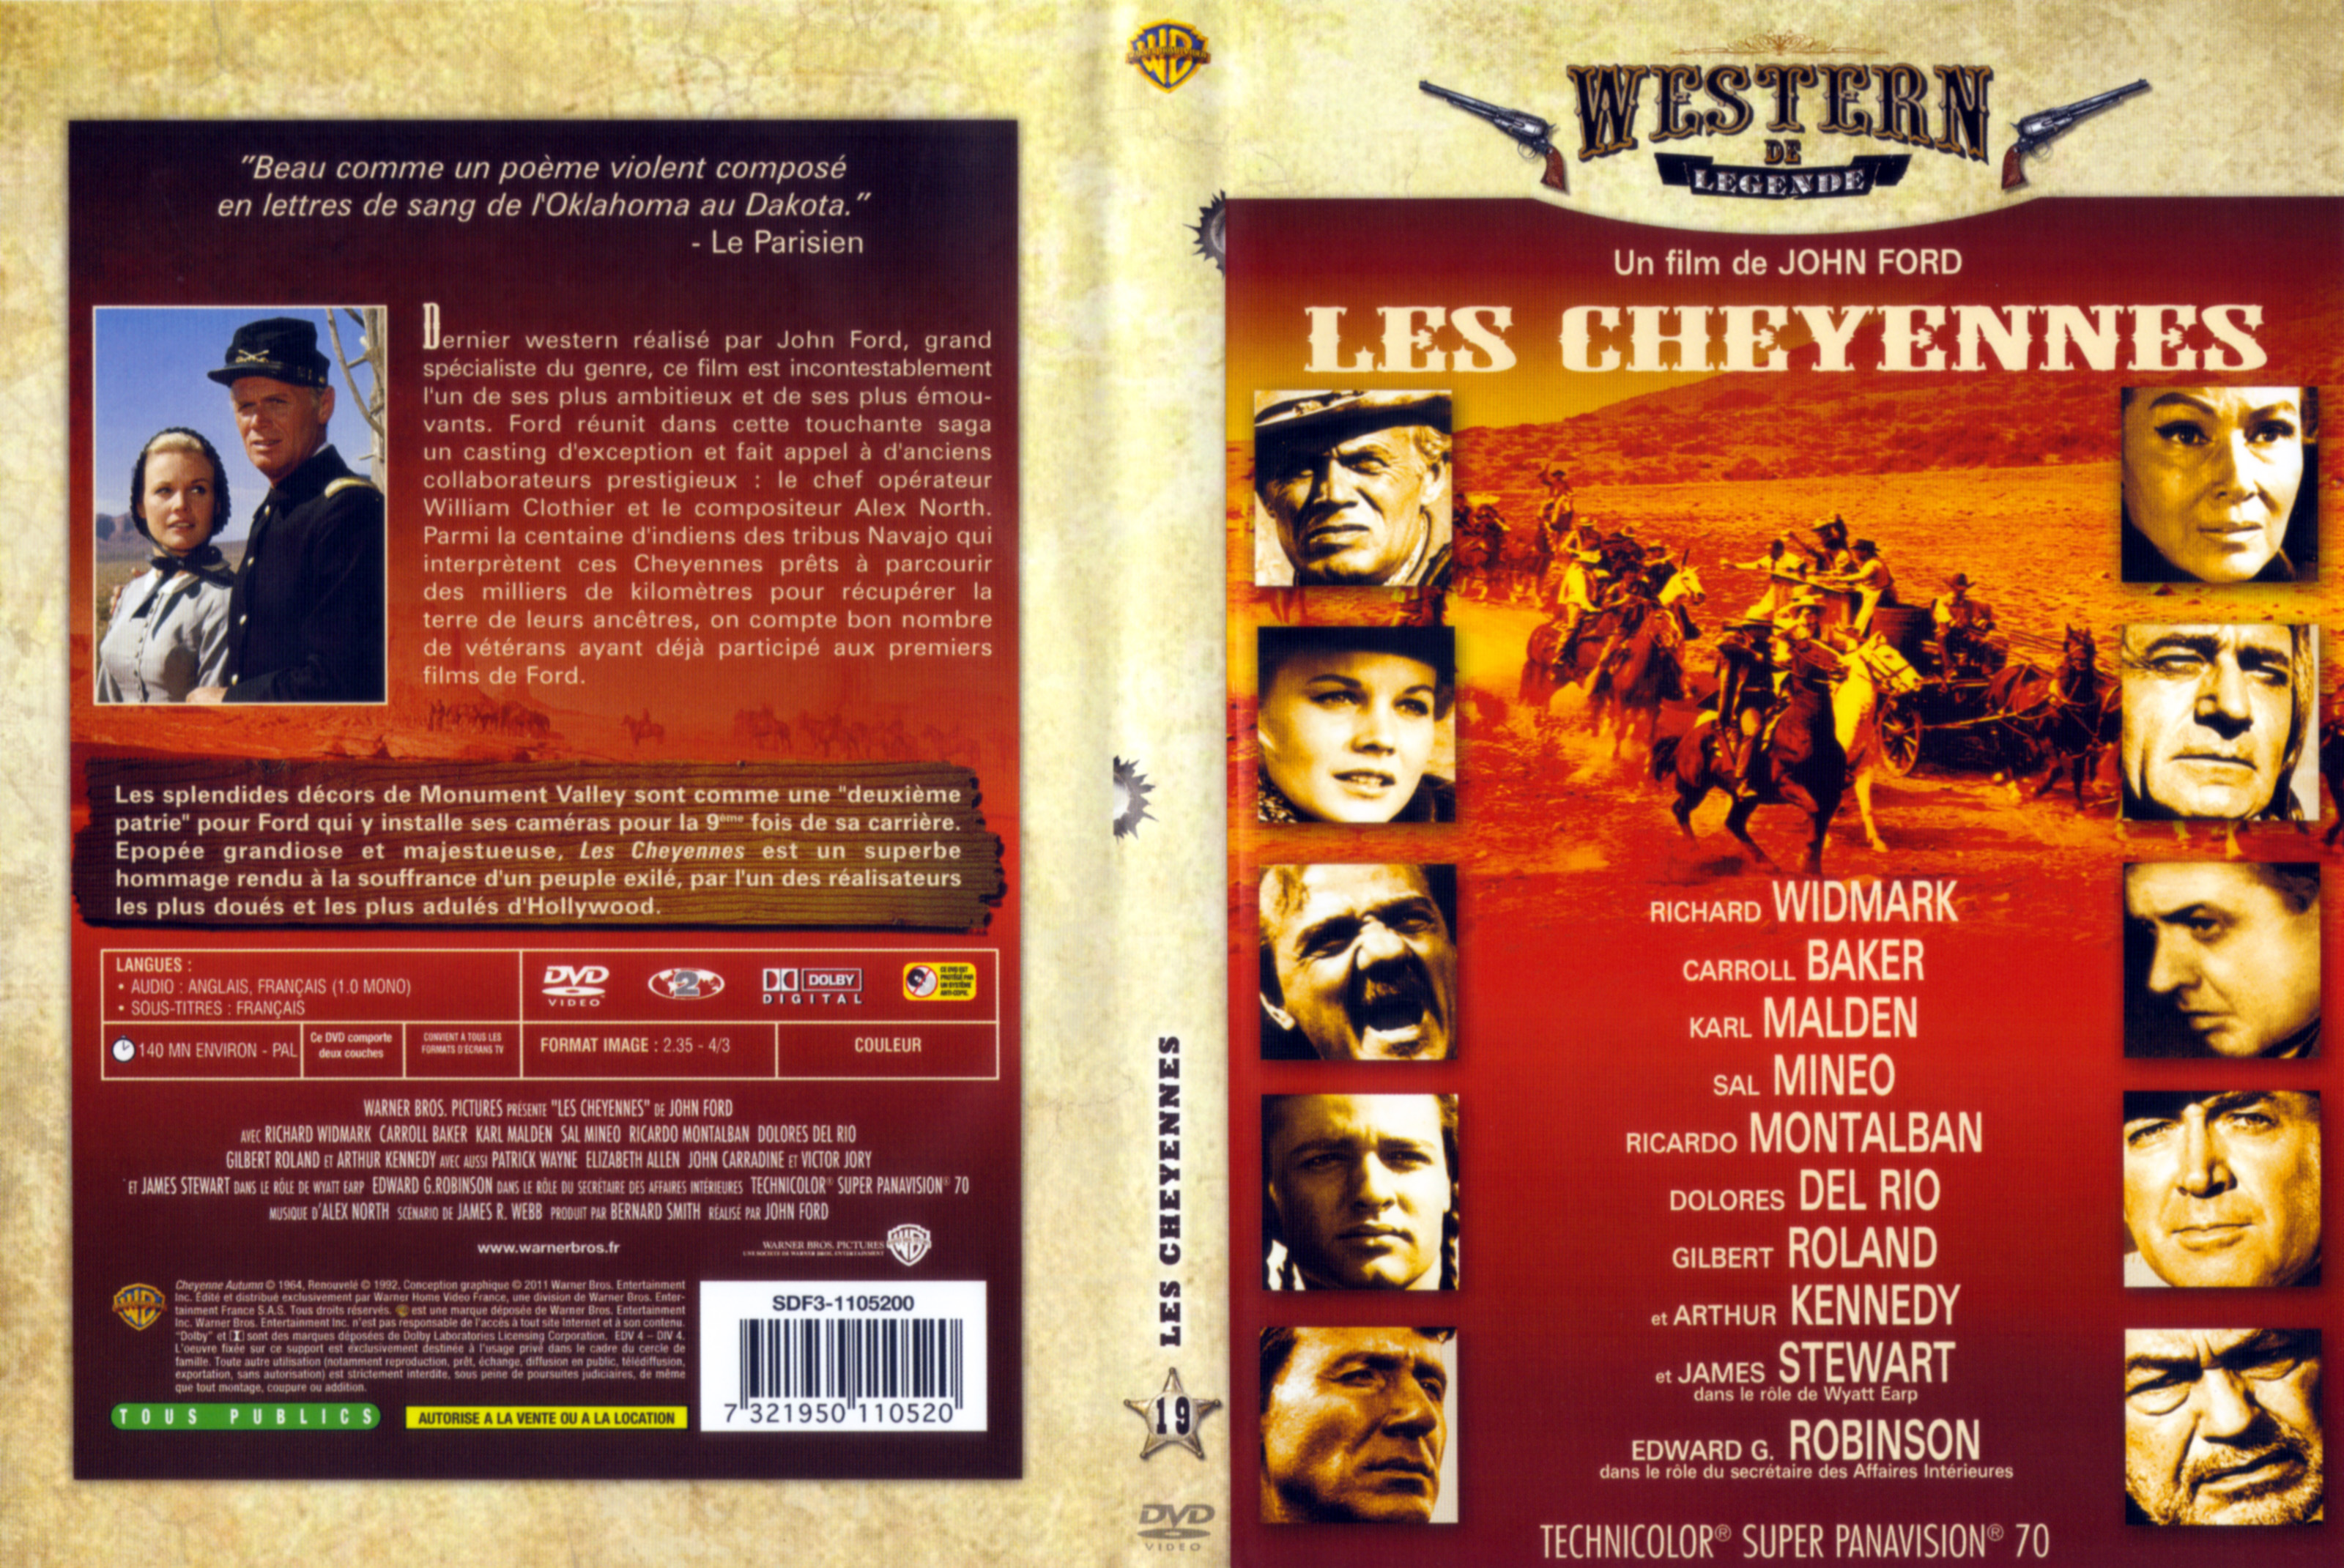 Jaquette DVD Les cheyennes v2